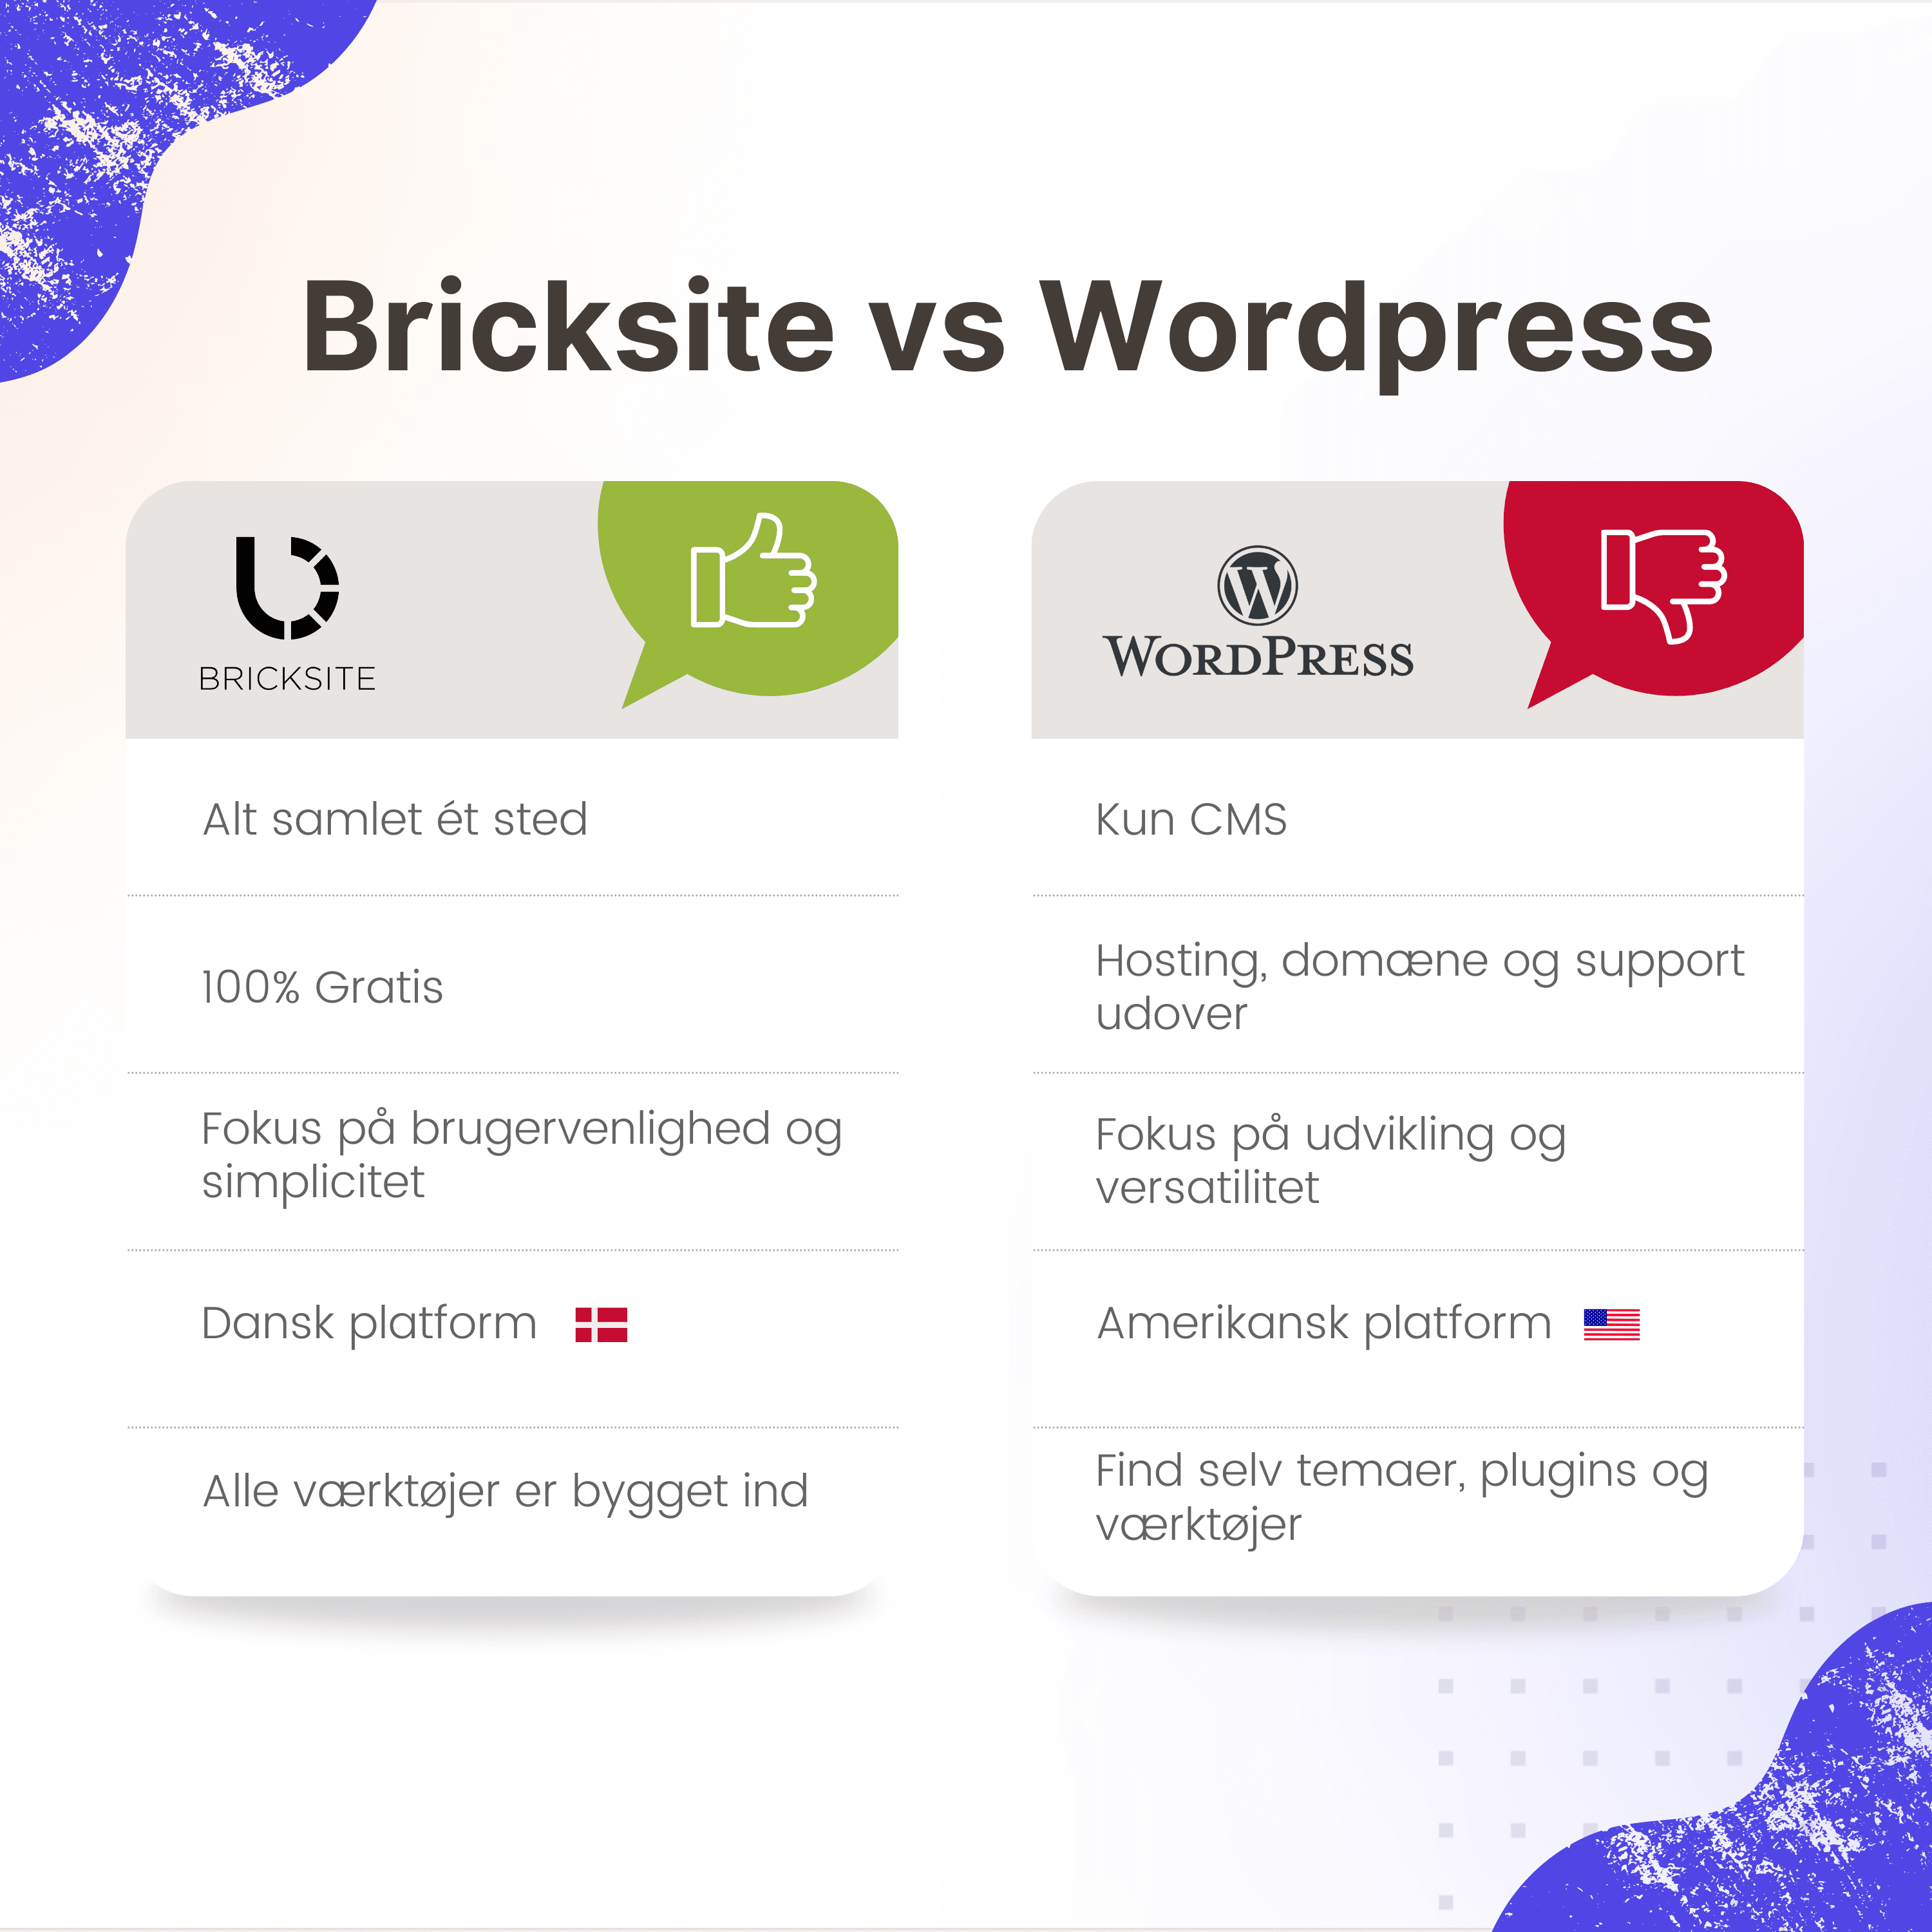 Bricksite vs Wordpress konklusion